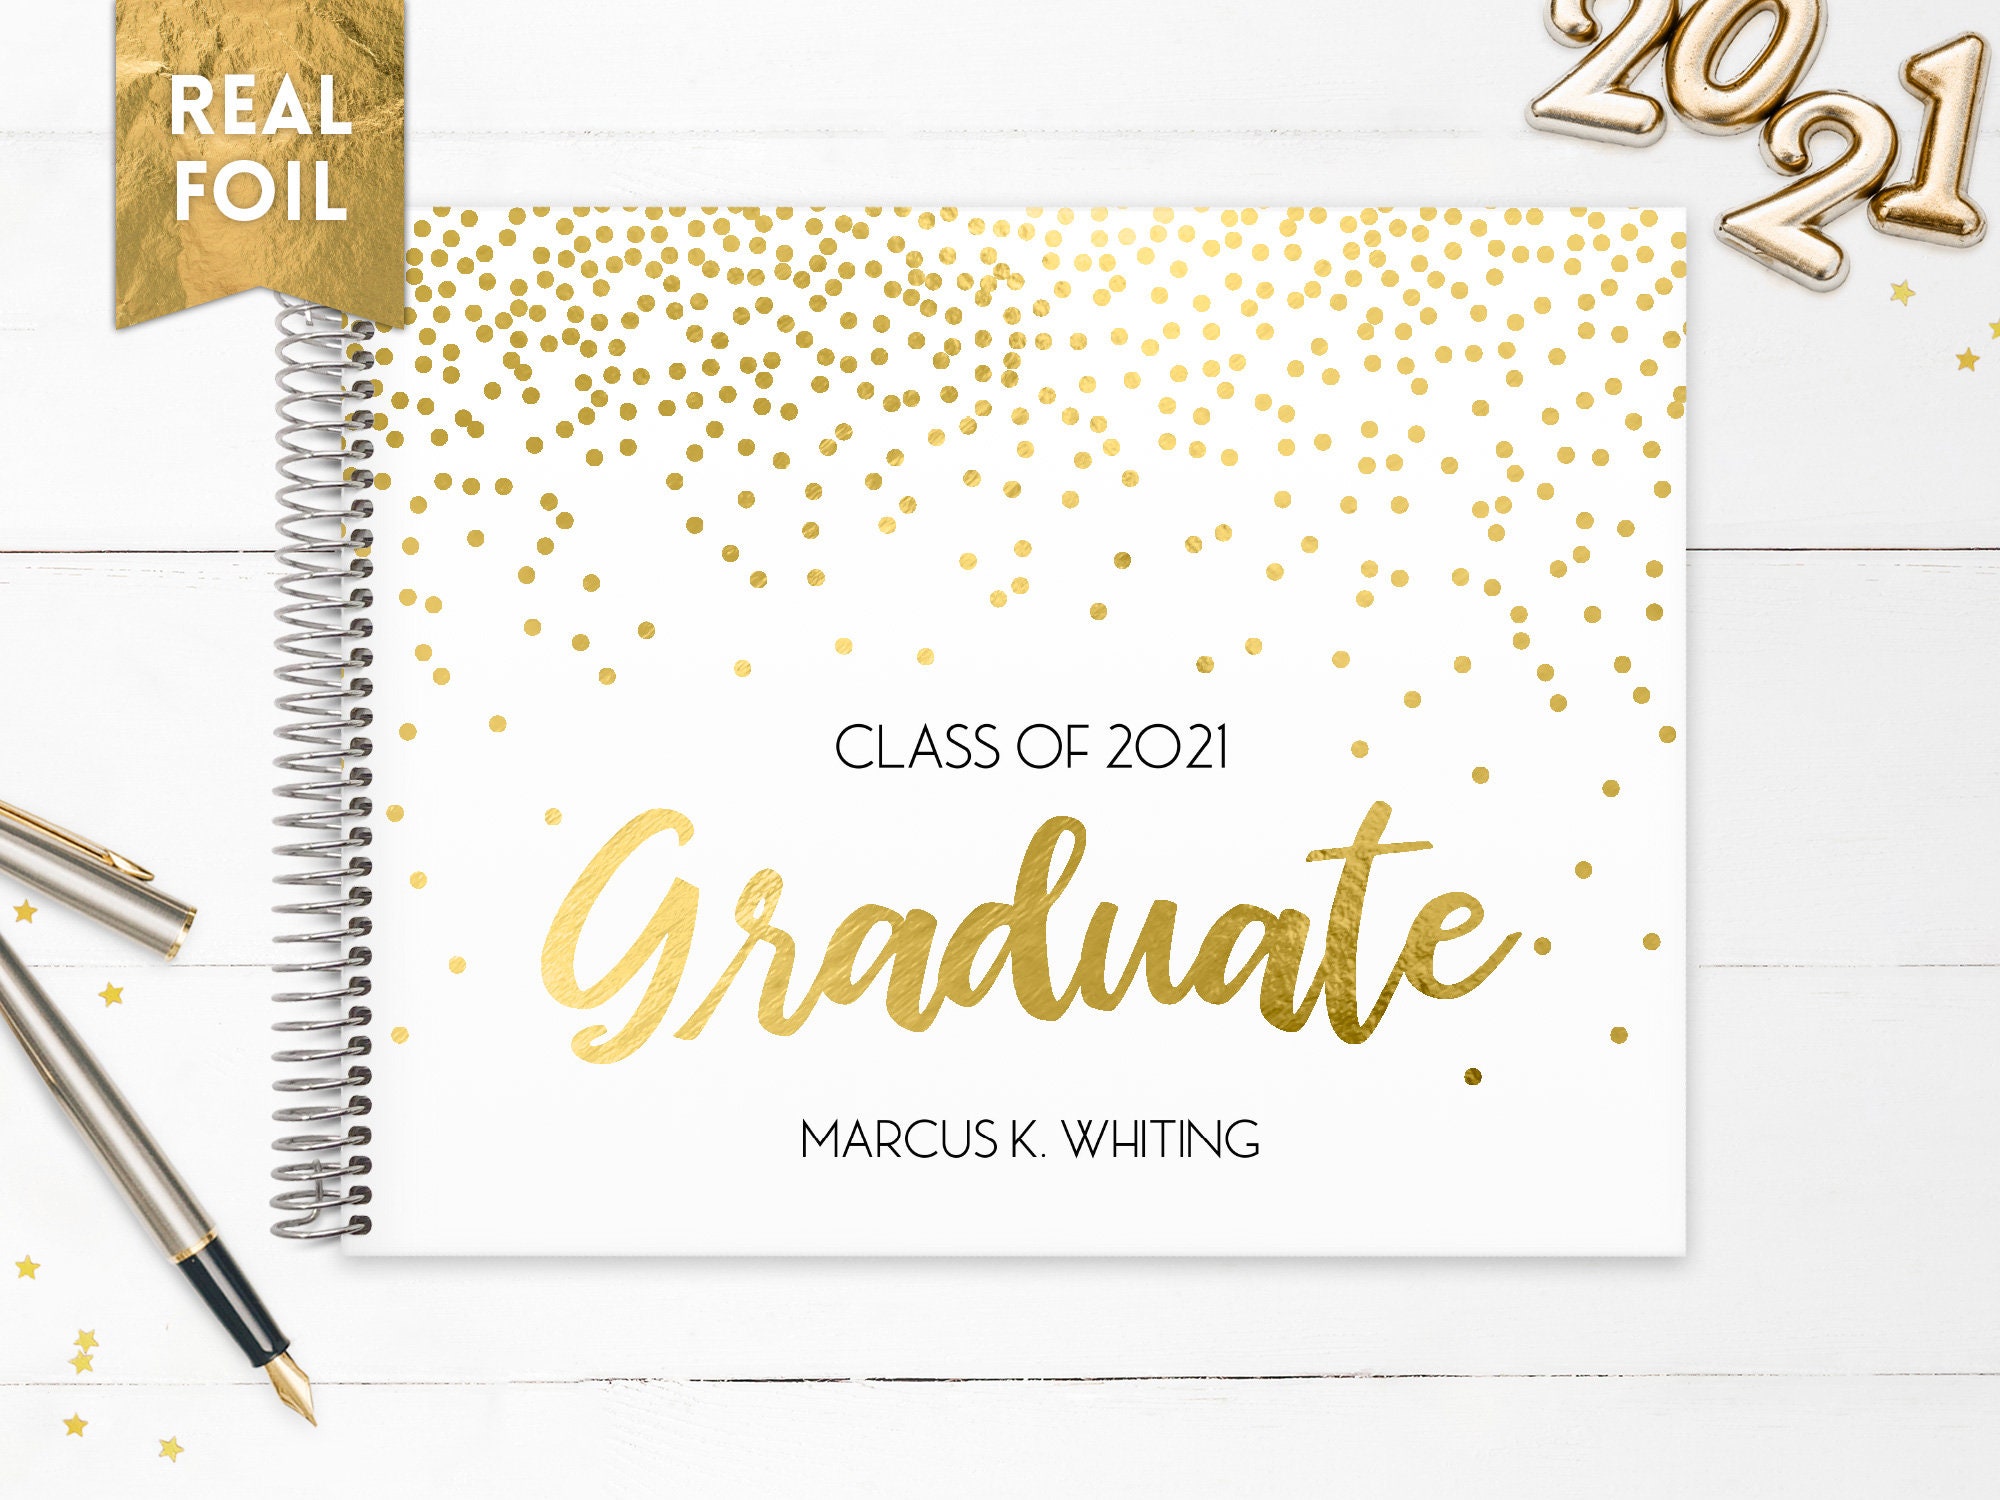 Premium Real Foil Graduation Guestbook | Guest Book Party Personalized Guestbook Grad Confetti